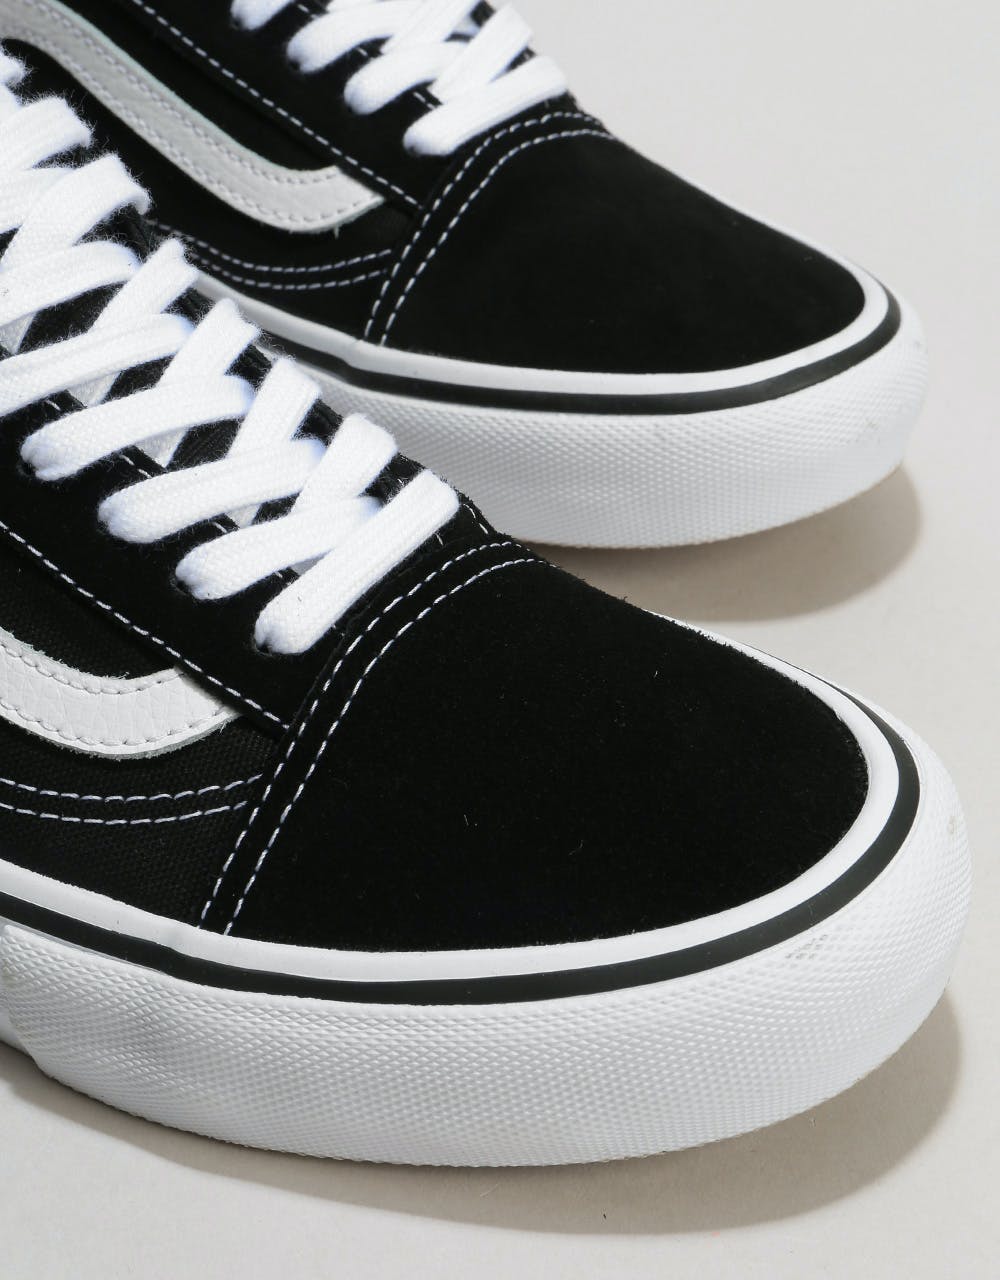 Vans Old Skool Pro Skate Shoes - Black/White